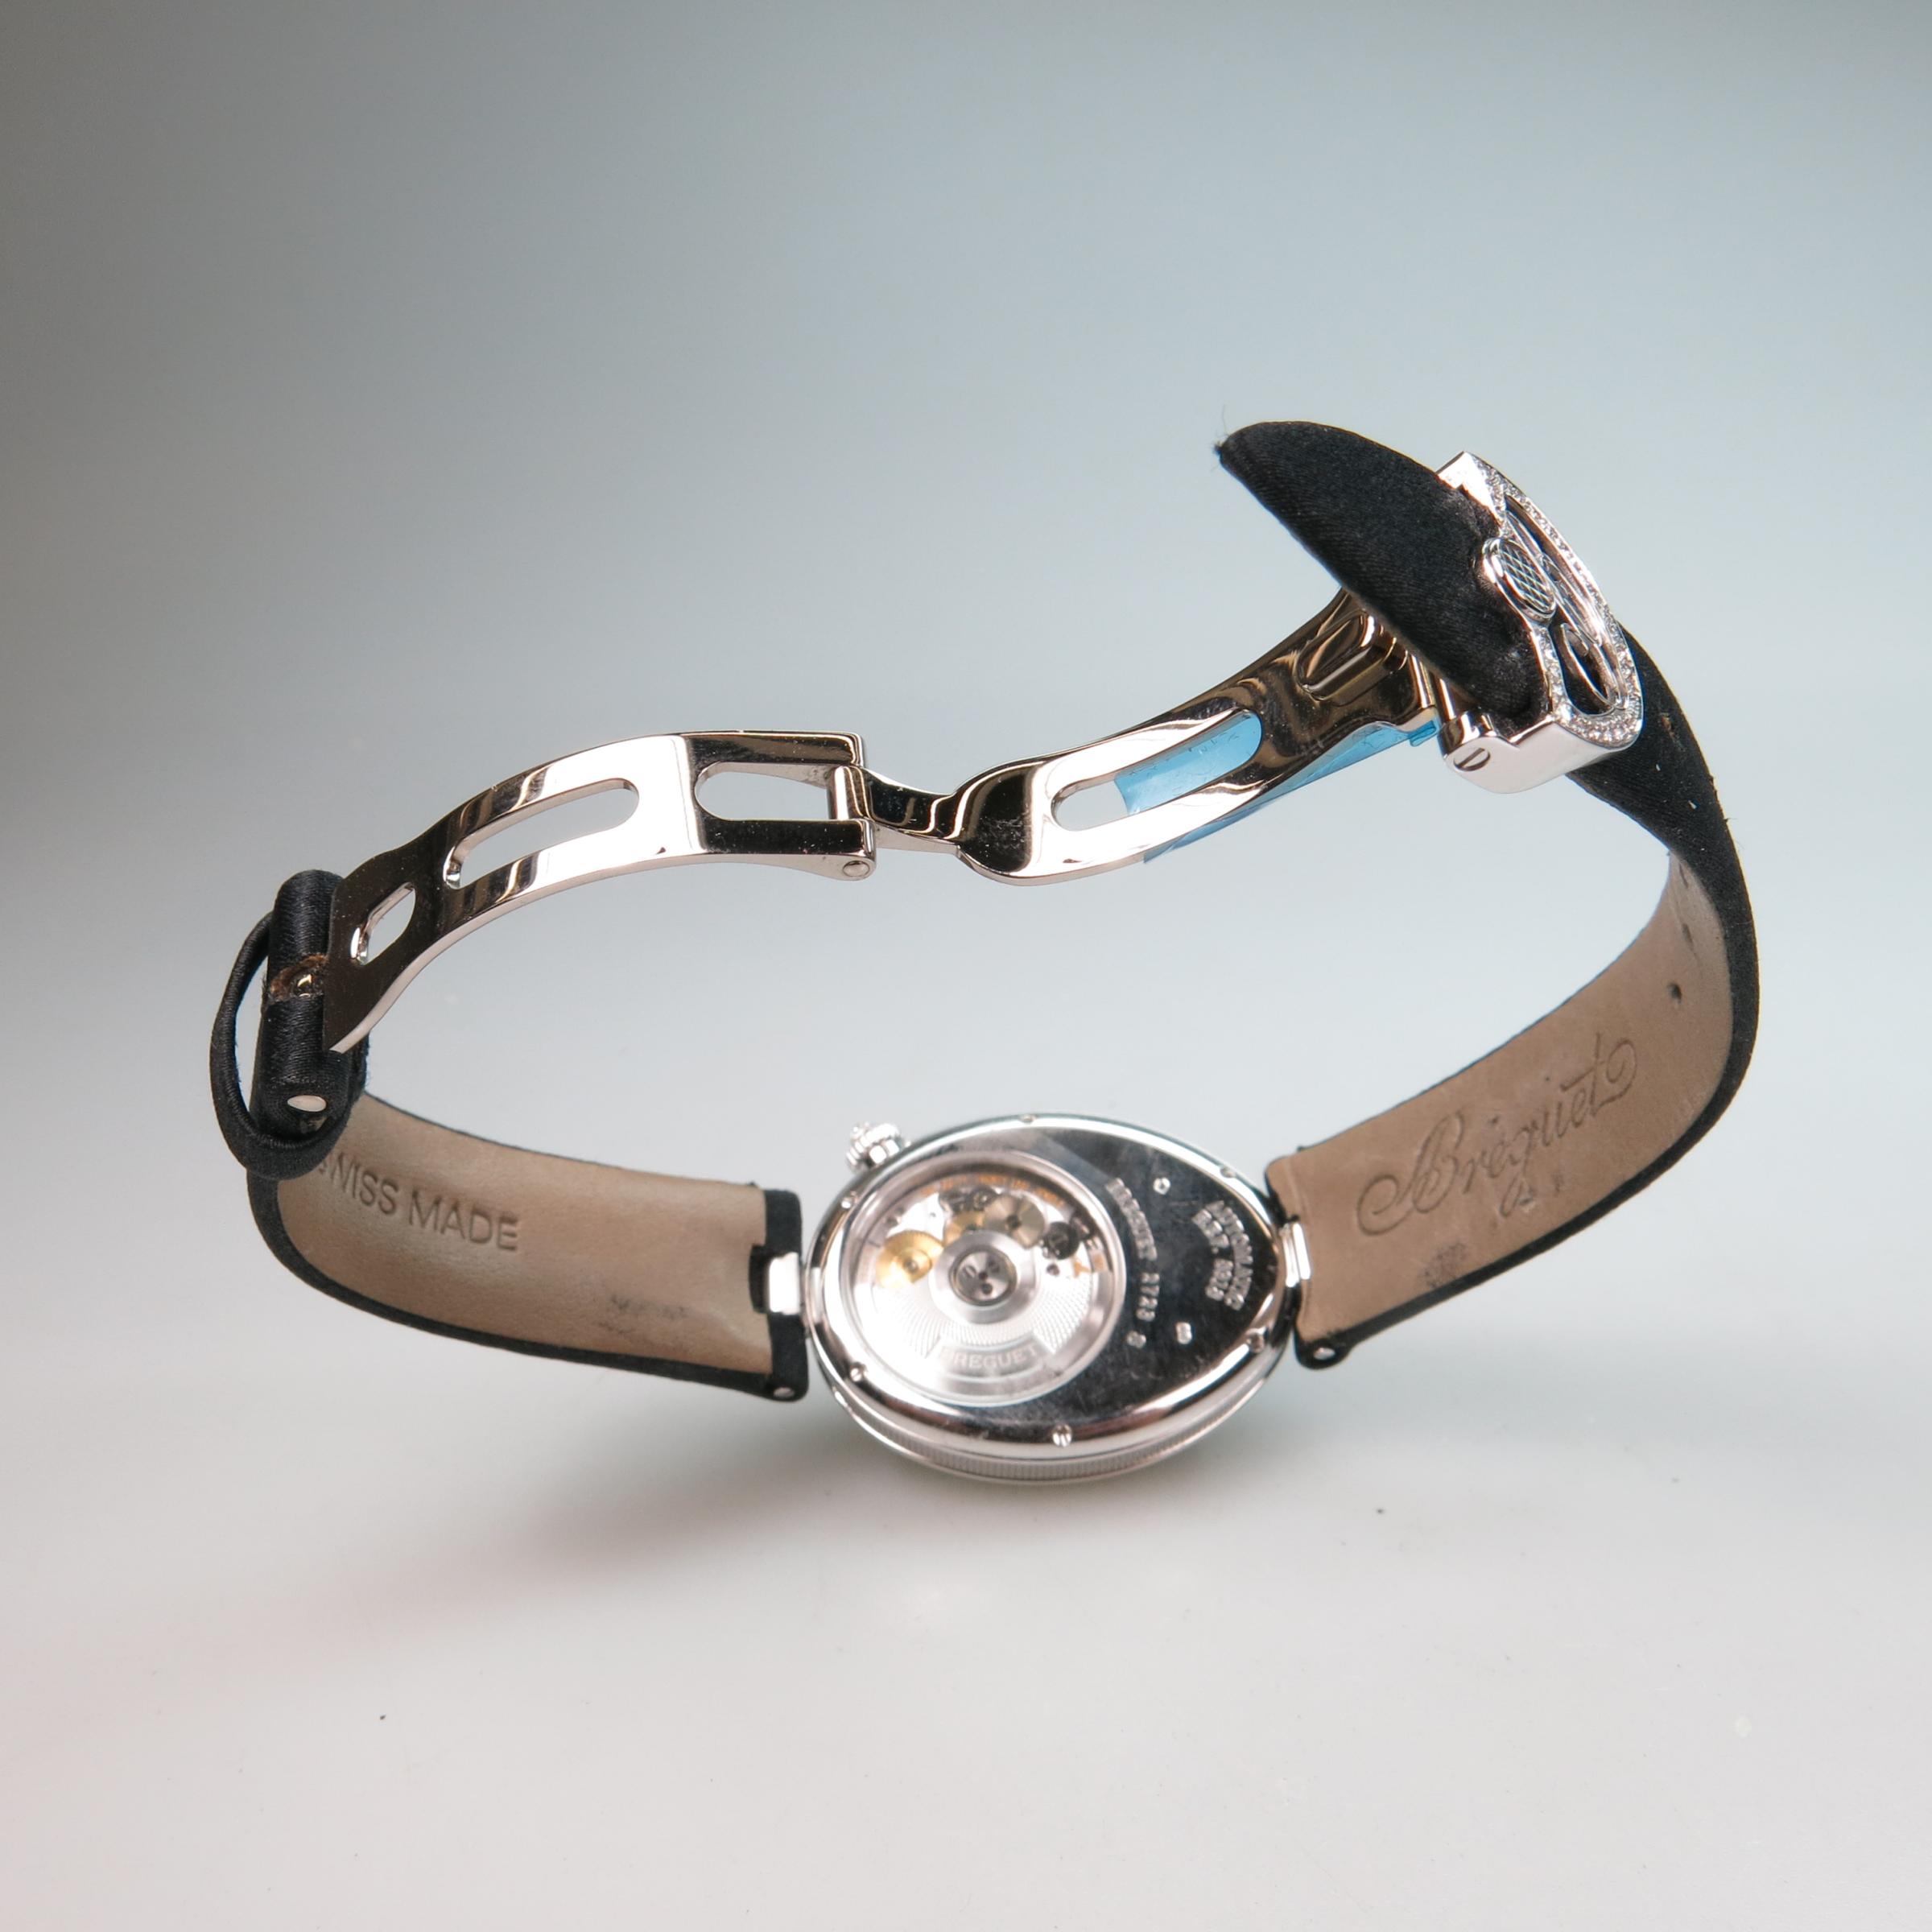 Lady's Breguet 'Reine De Naples' Wristwatch